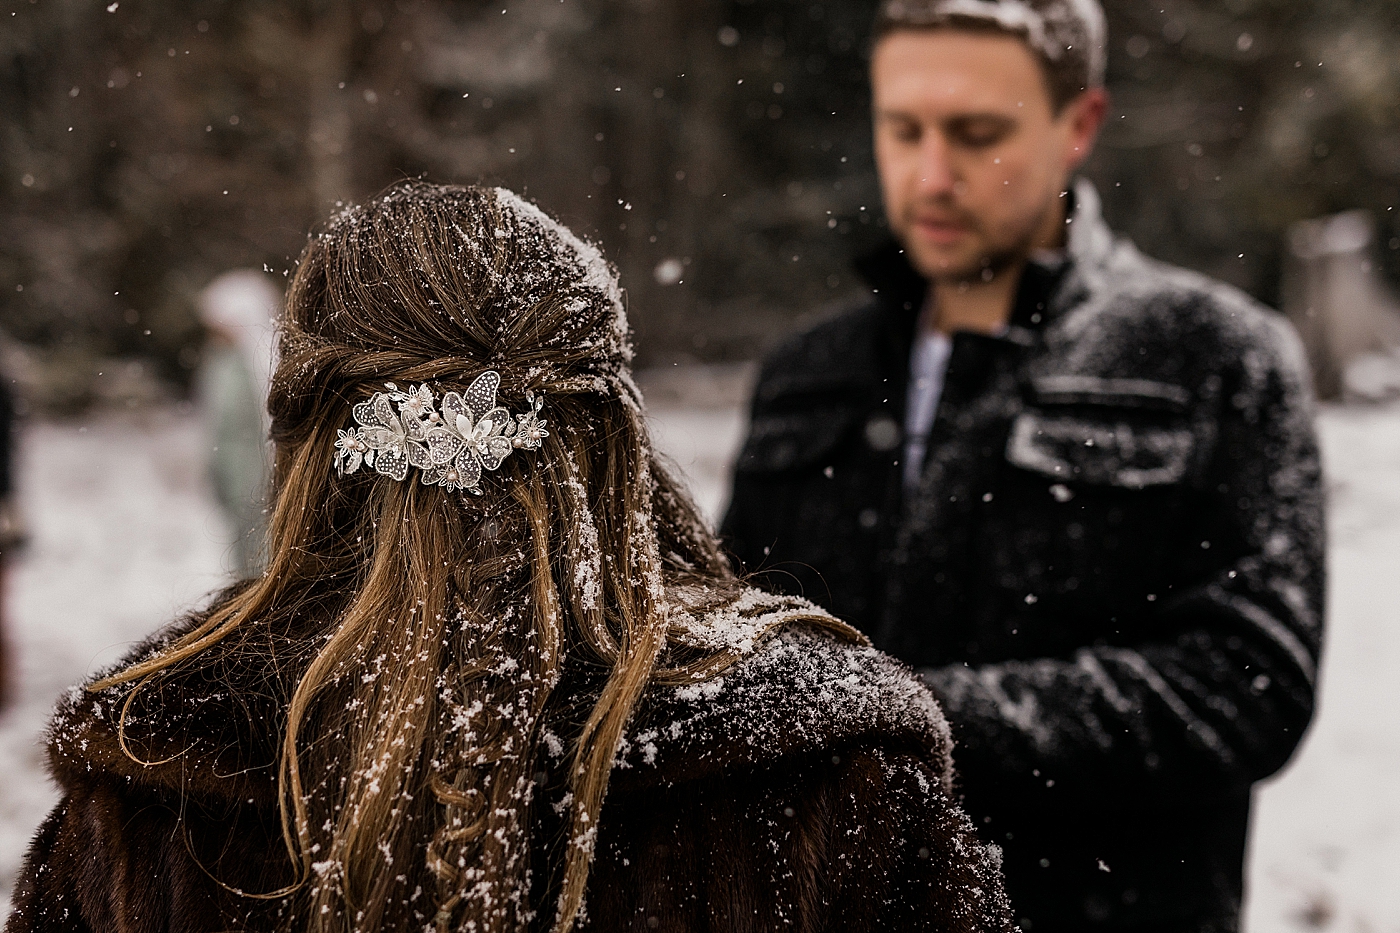 Snowy elopement at Lake Kachess. Photos by PNW Elopement Photographer, Megan Montalvo Photography. 